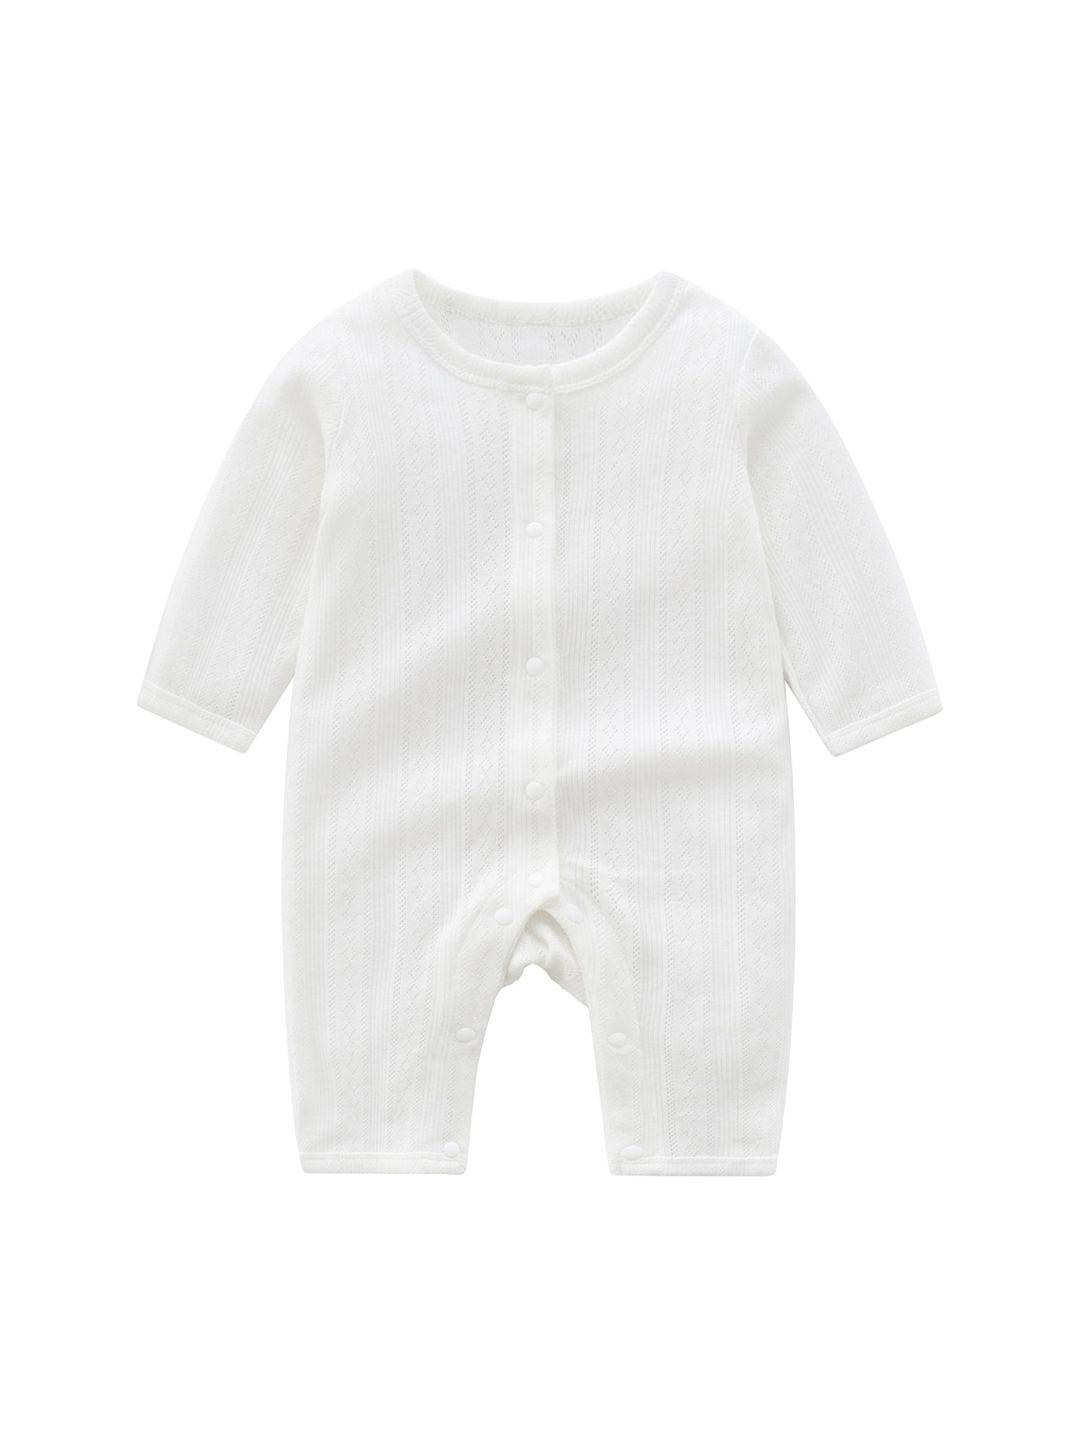 stylecast-infants-white-self-design-cotton-romper